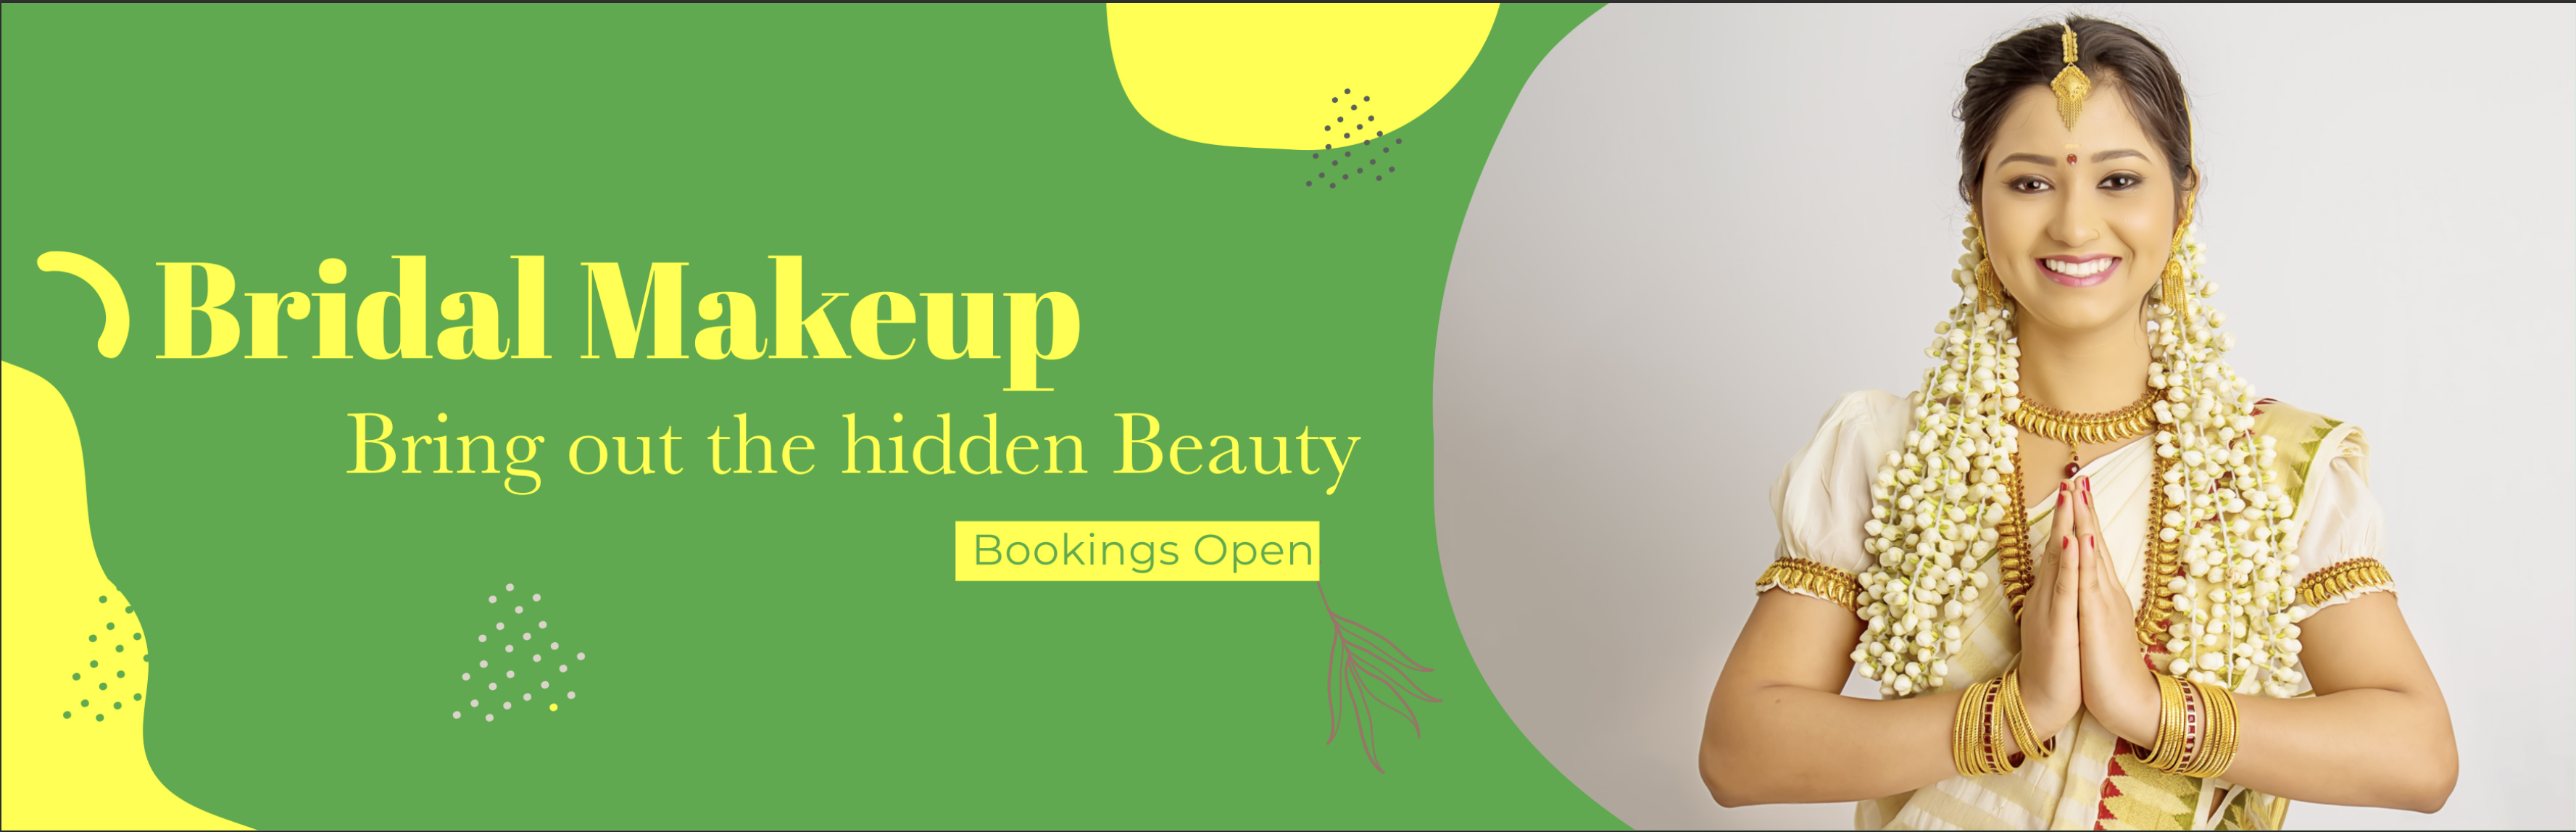 Best Beauty Parlour in Chennai - Priyank Beauty Spa